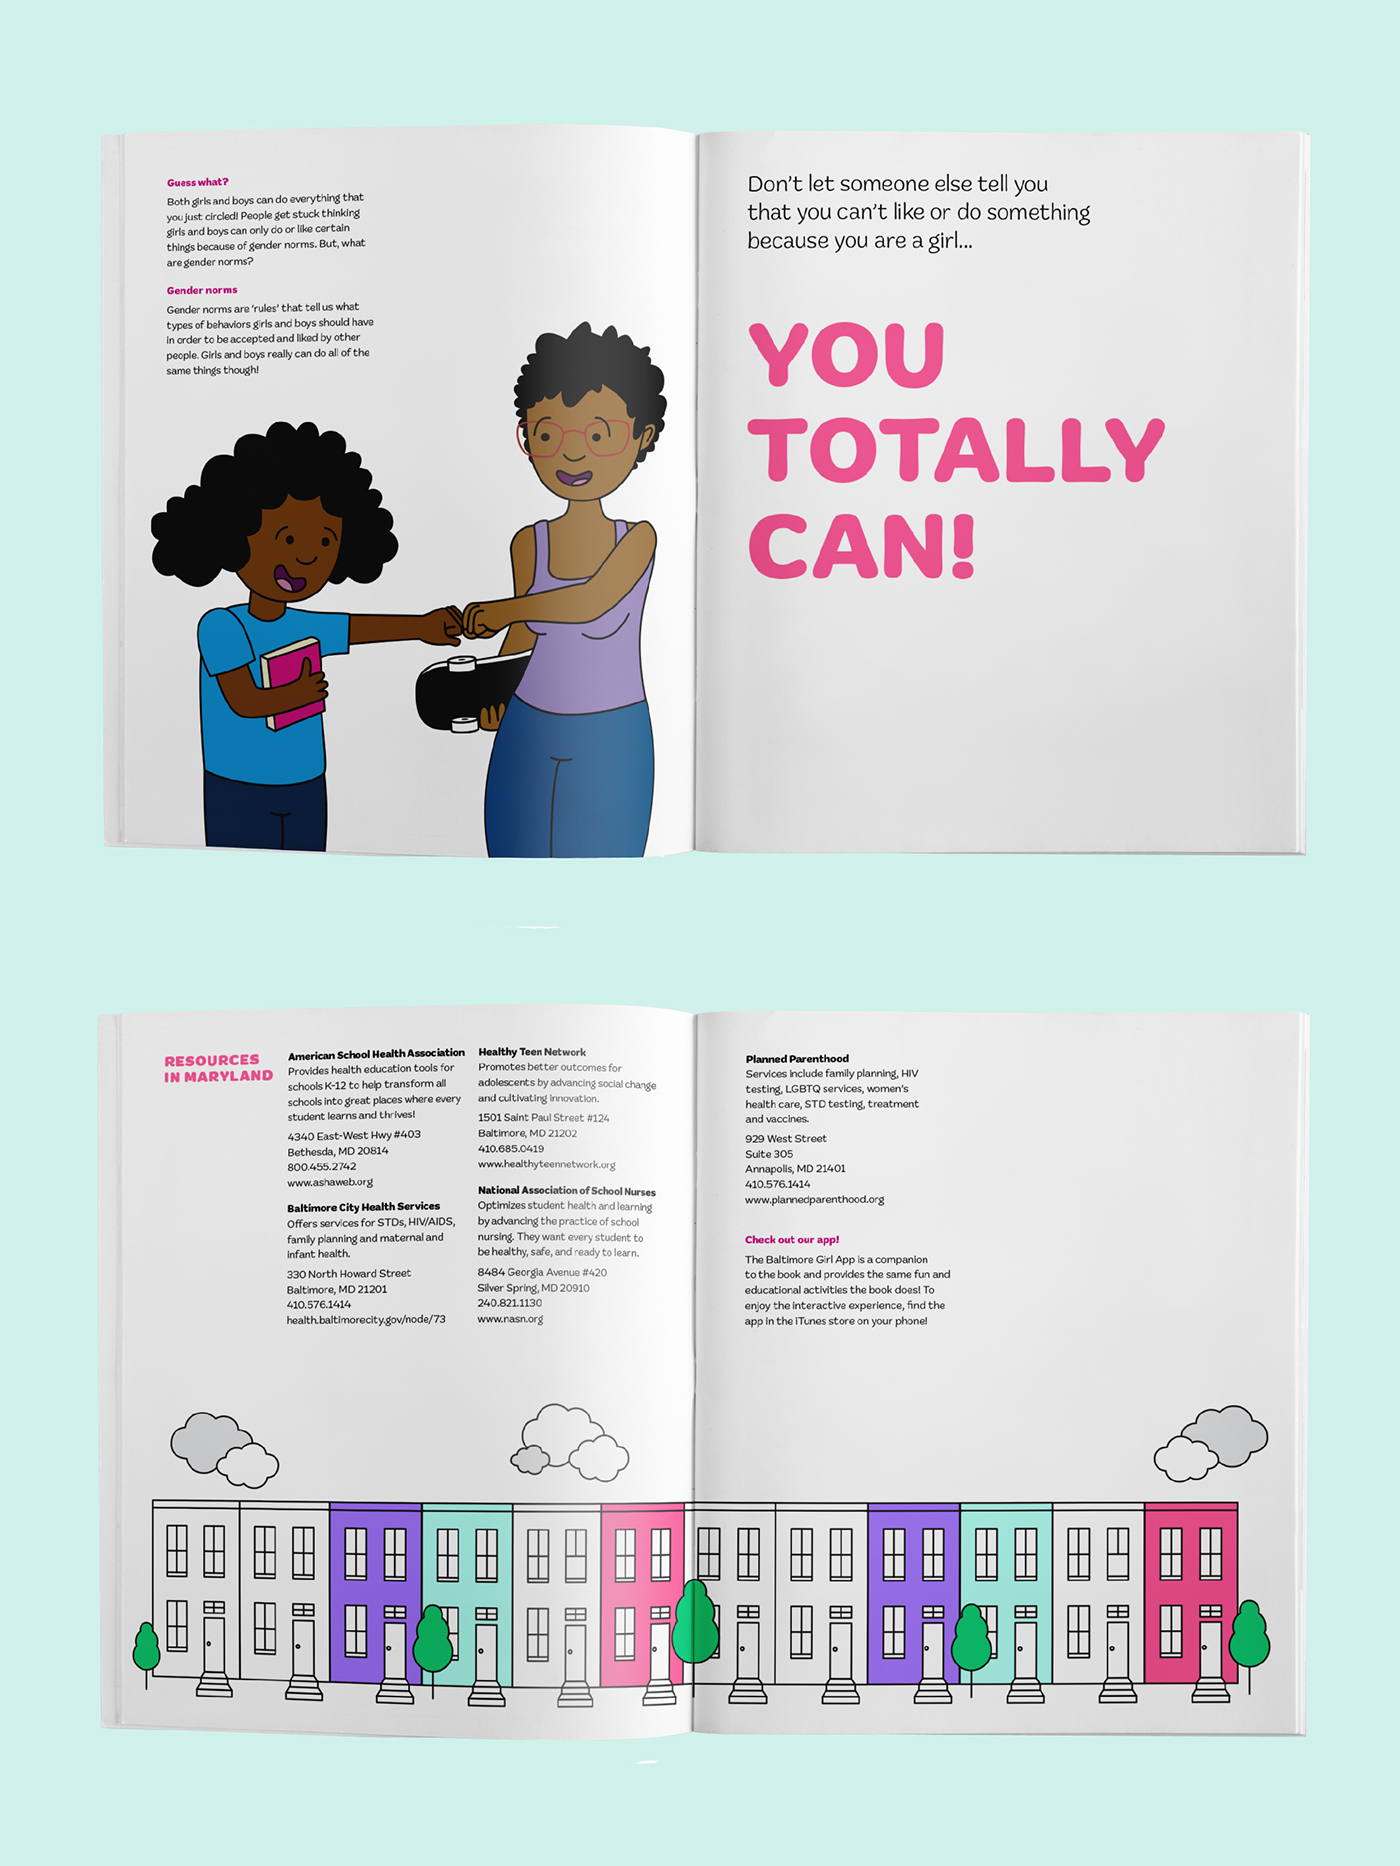 Education puberty girls social design community Elementary School Baltimore app design publication design